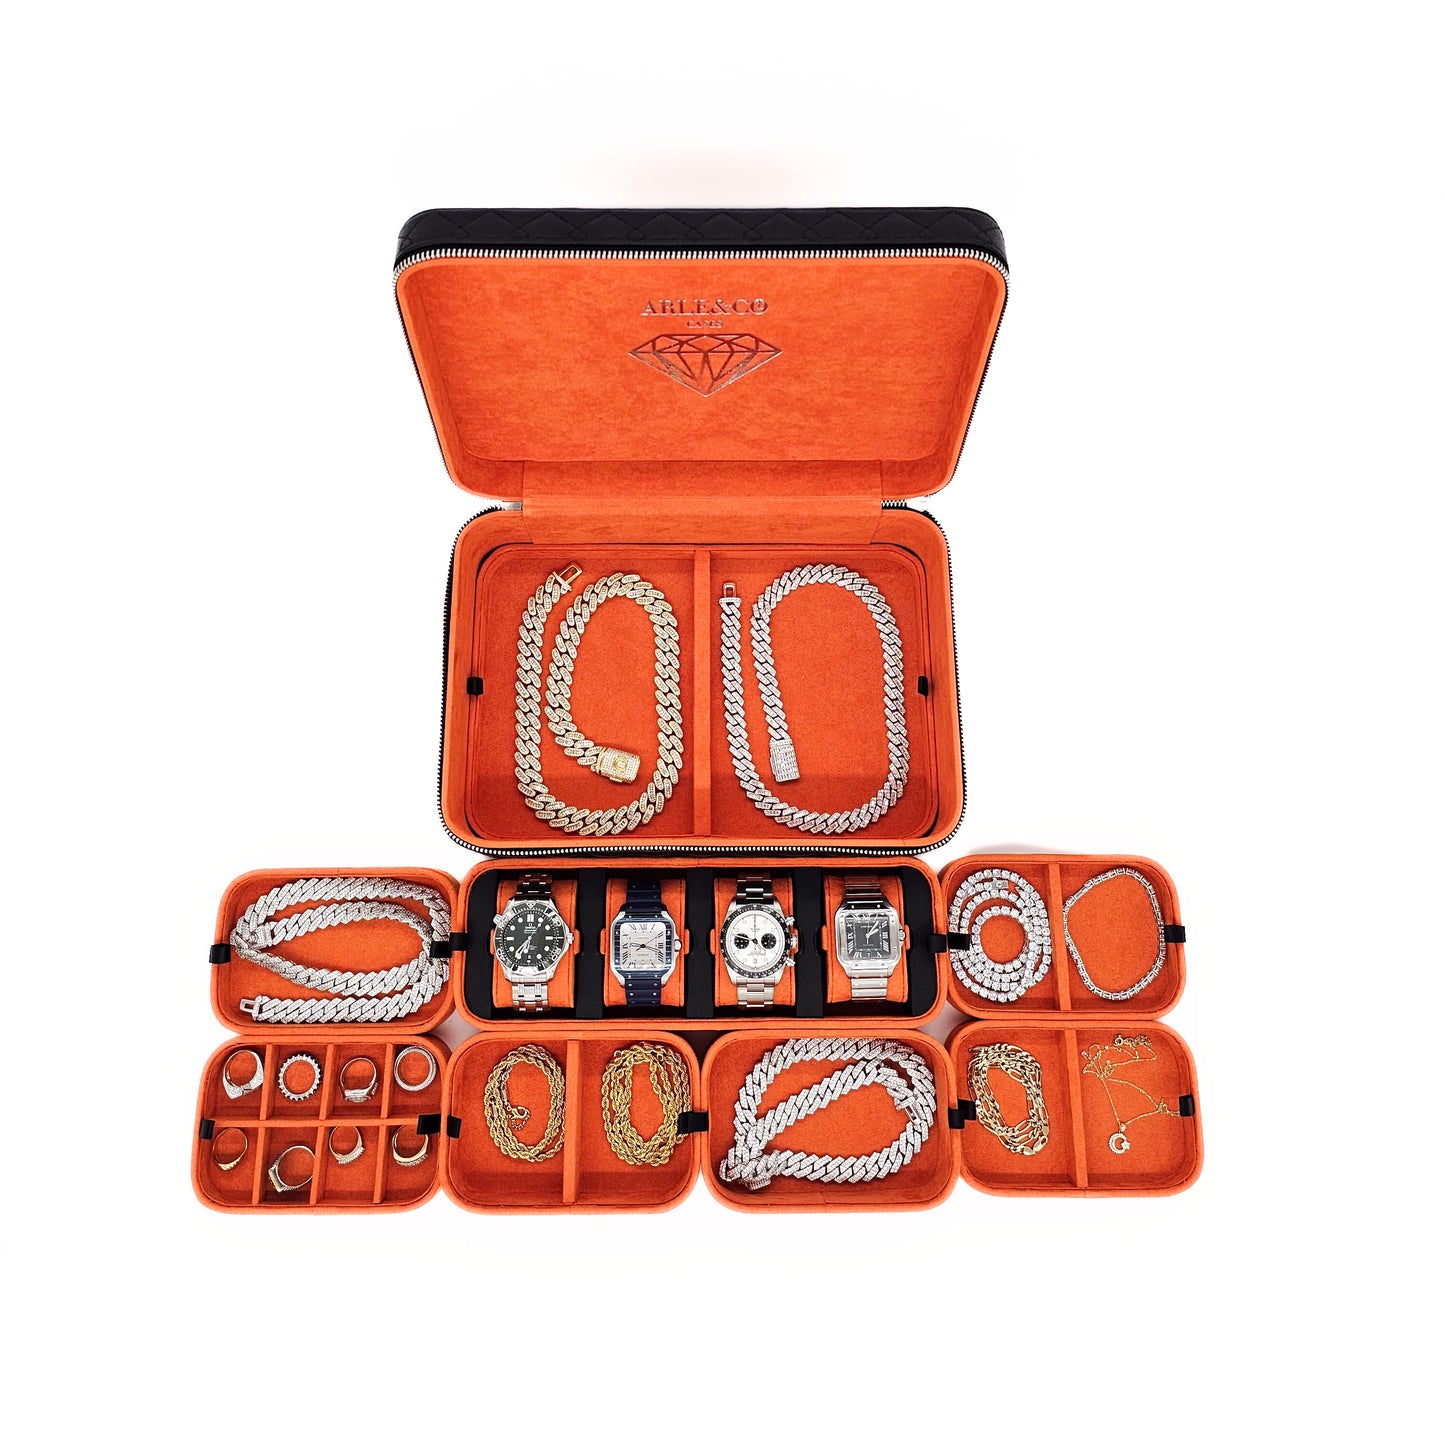 Black and orange watch/jewellery case